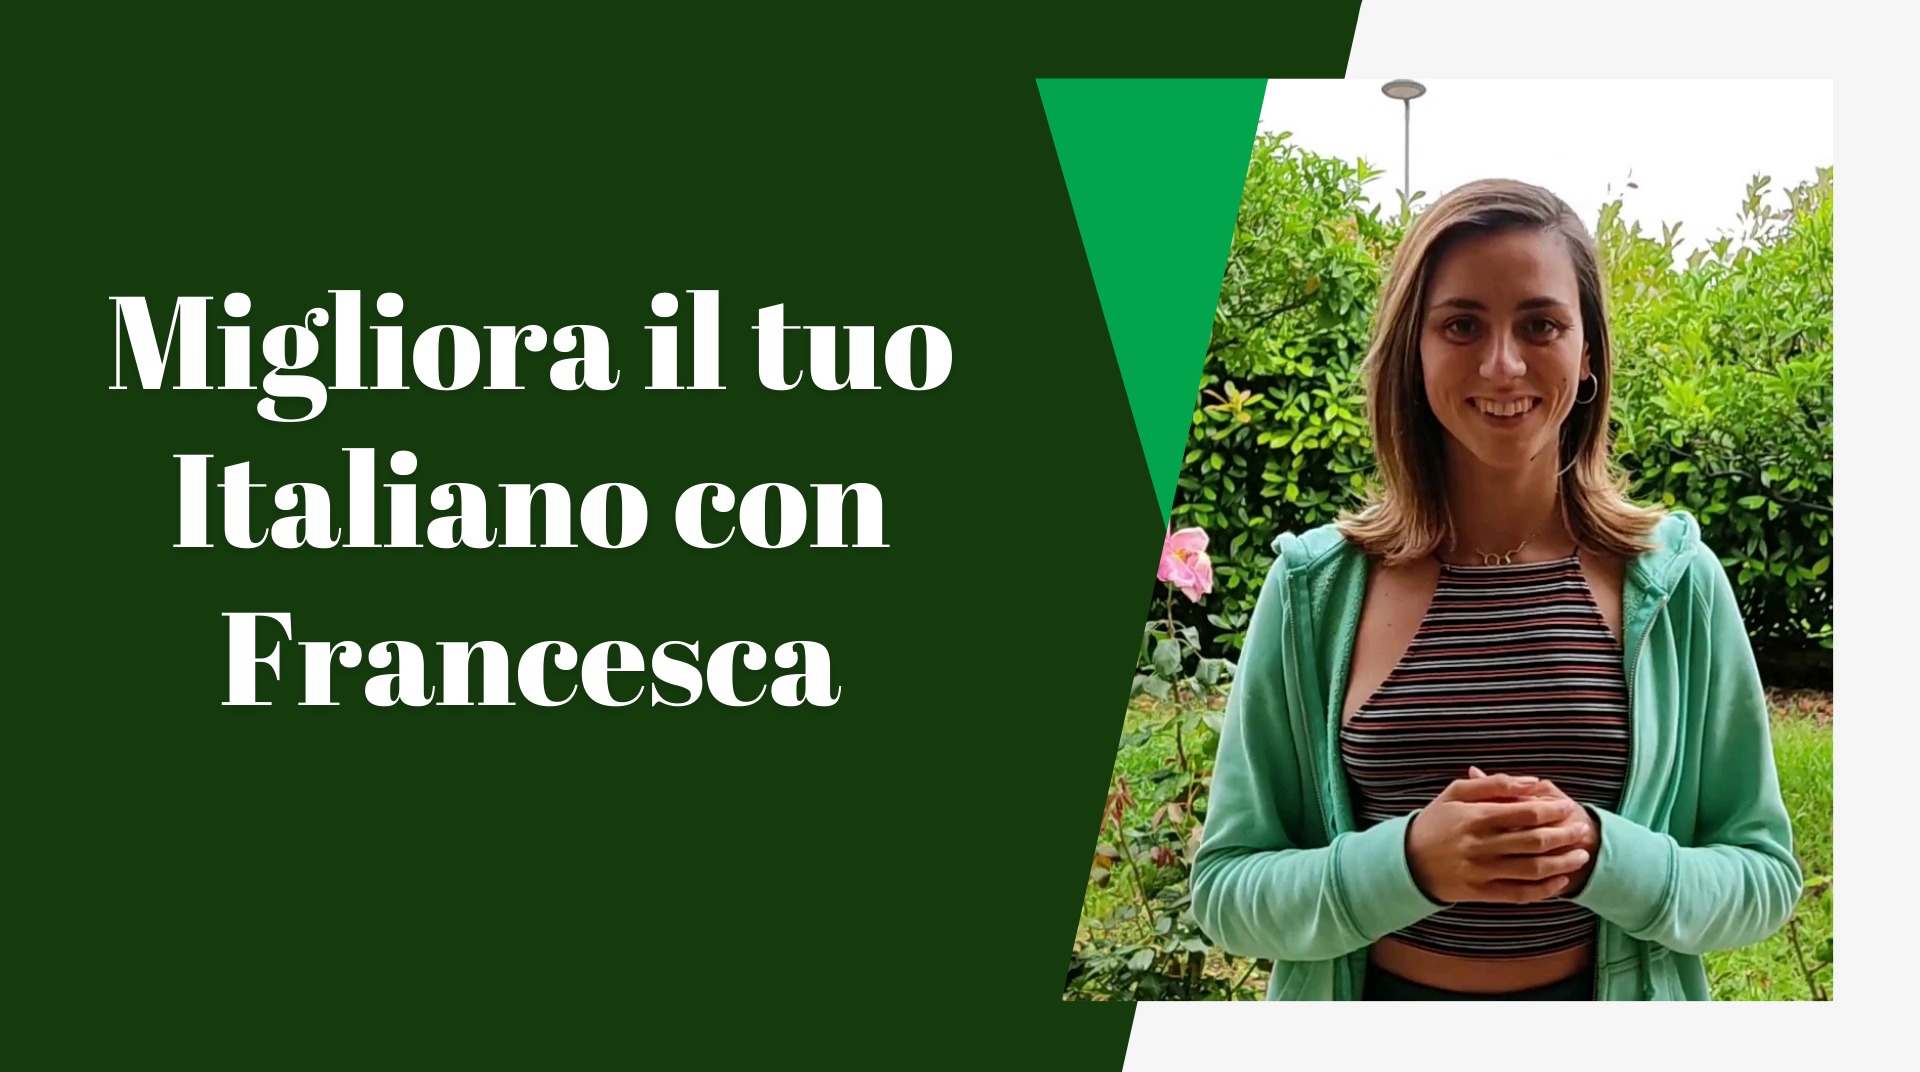 Learn Italian with Francesca - Your Italian tutor from italki